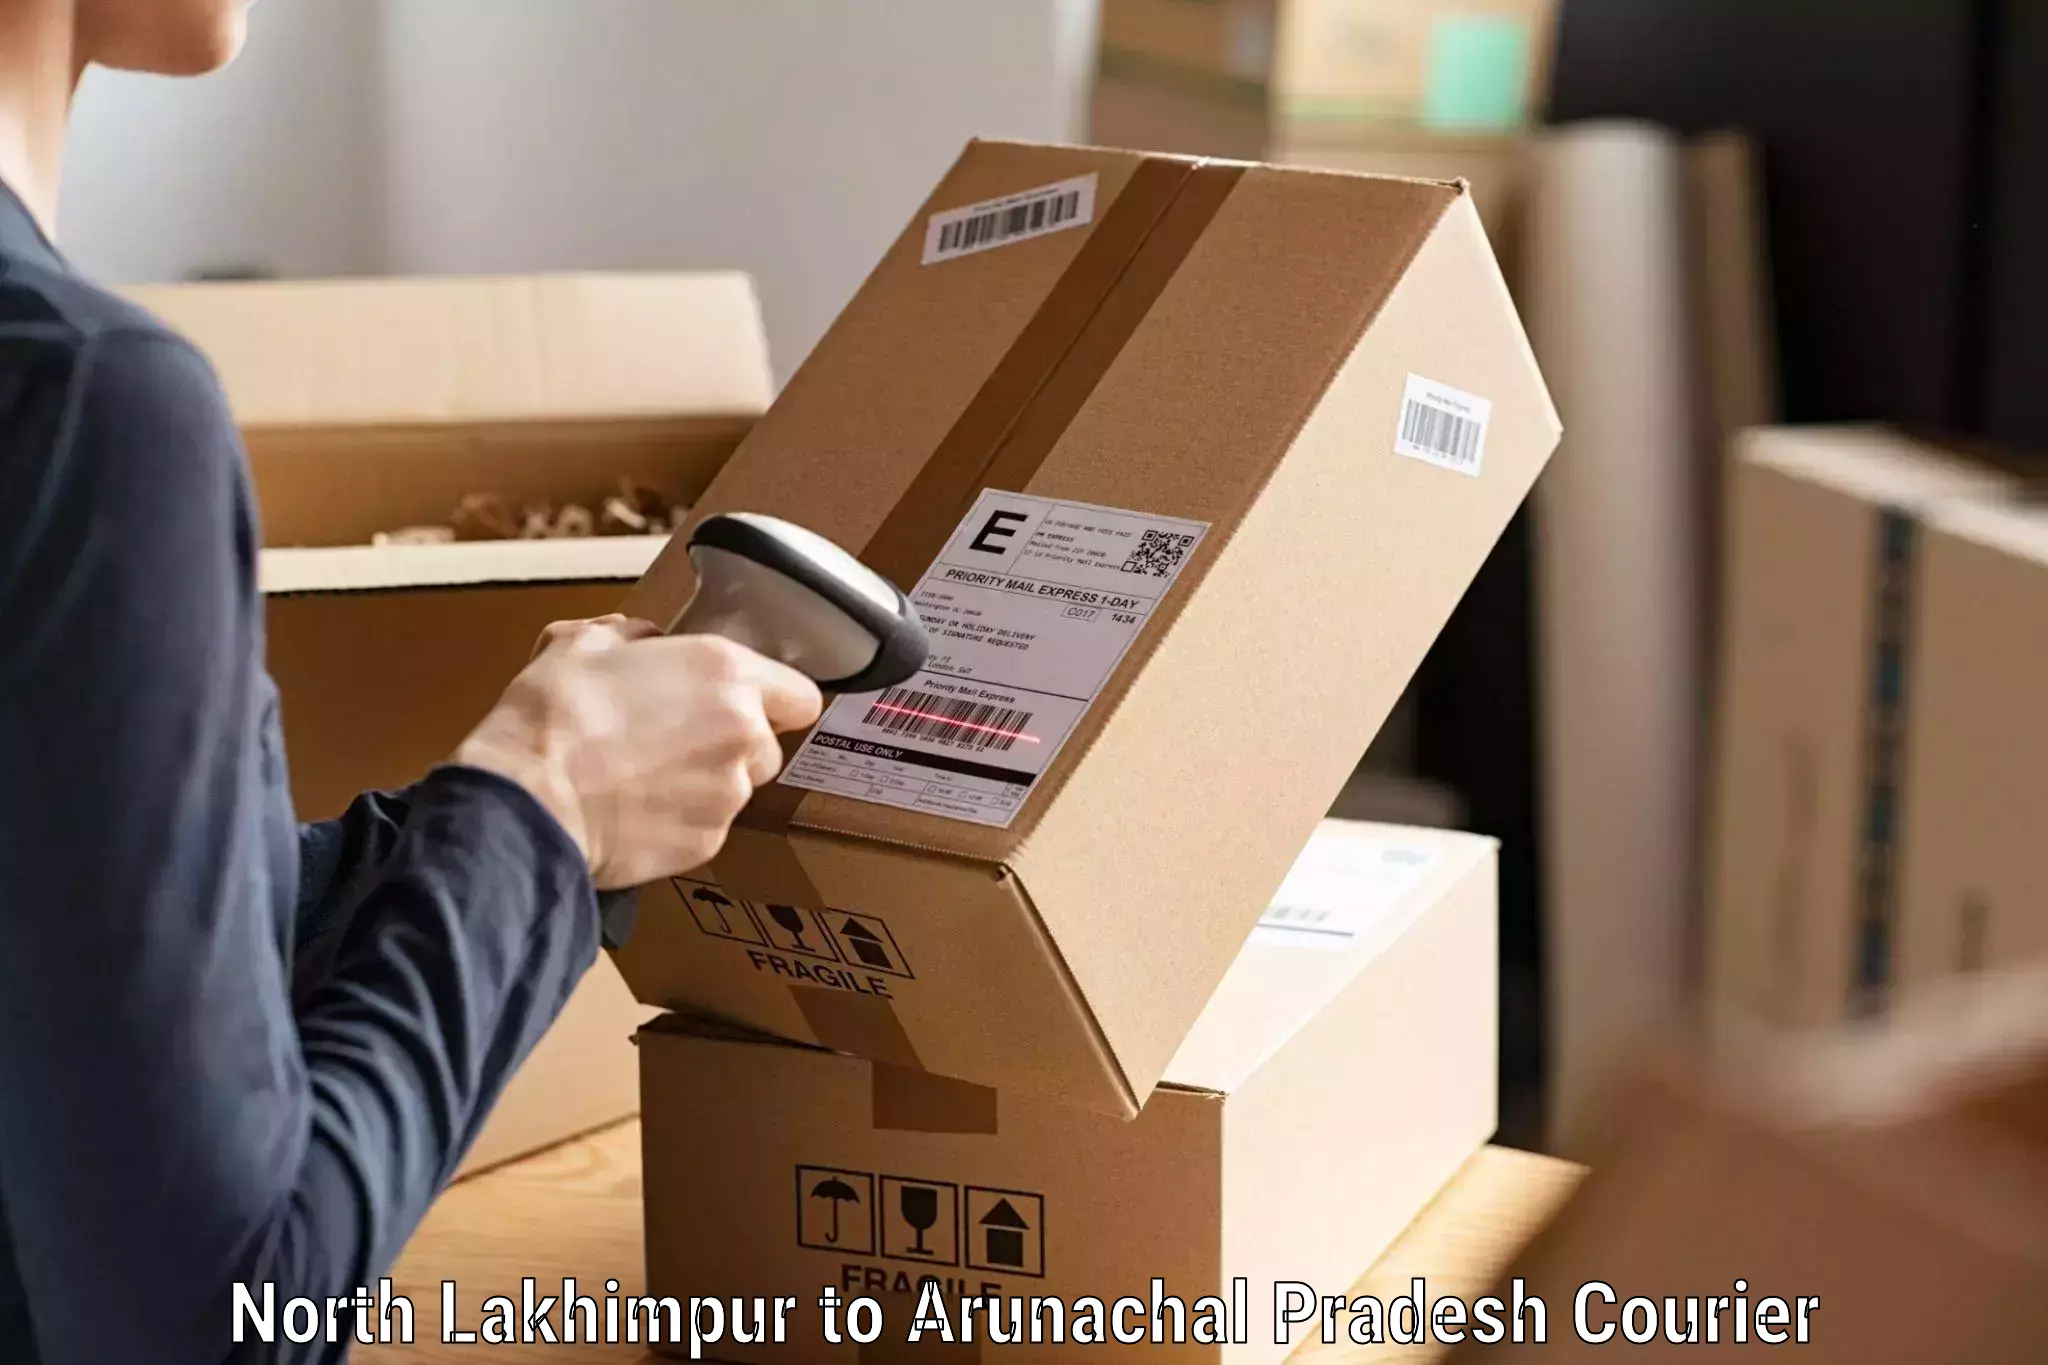 Professional parcel services North Lakhimpur to Arunachal Pradesh